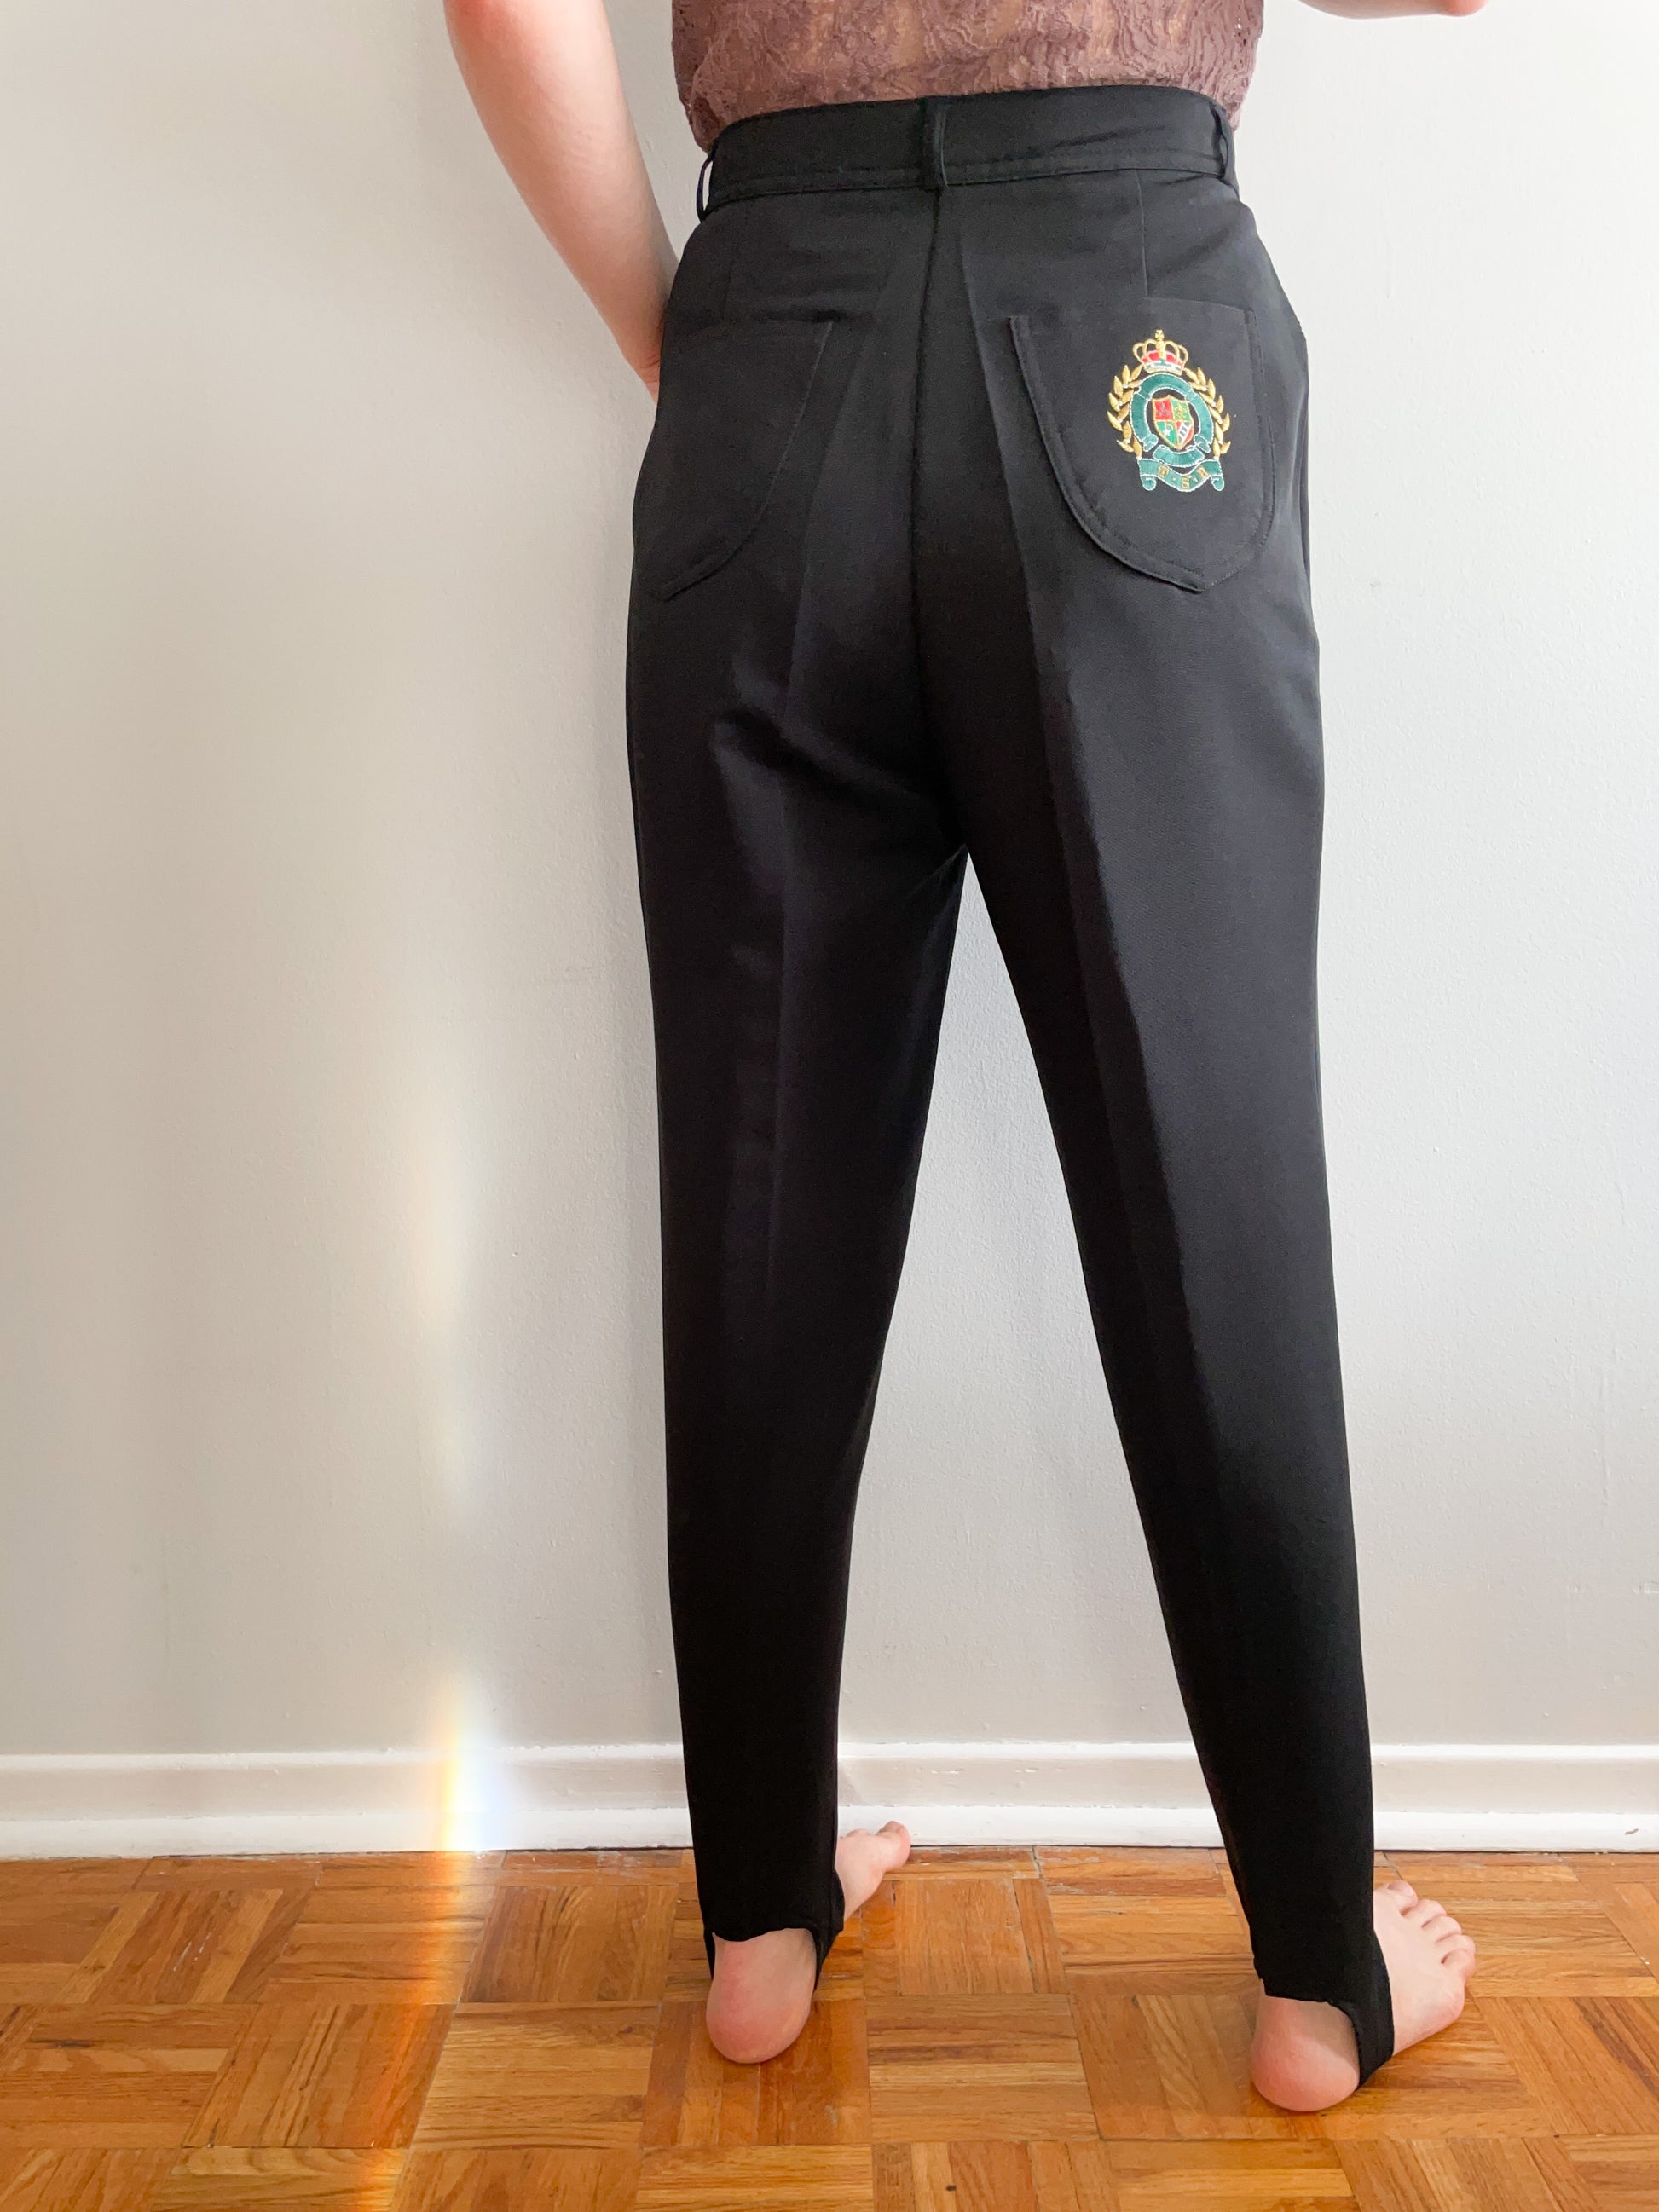 Tamsrum Black High Rise Trouser Stirrup Pants - S/M – Le Prix